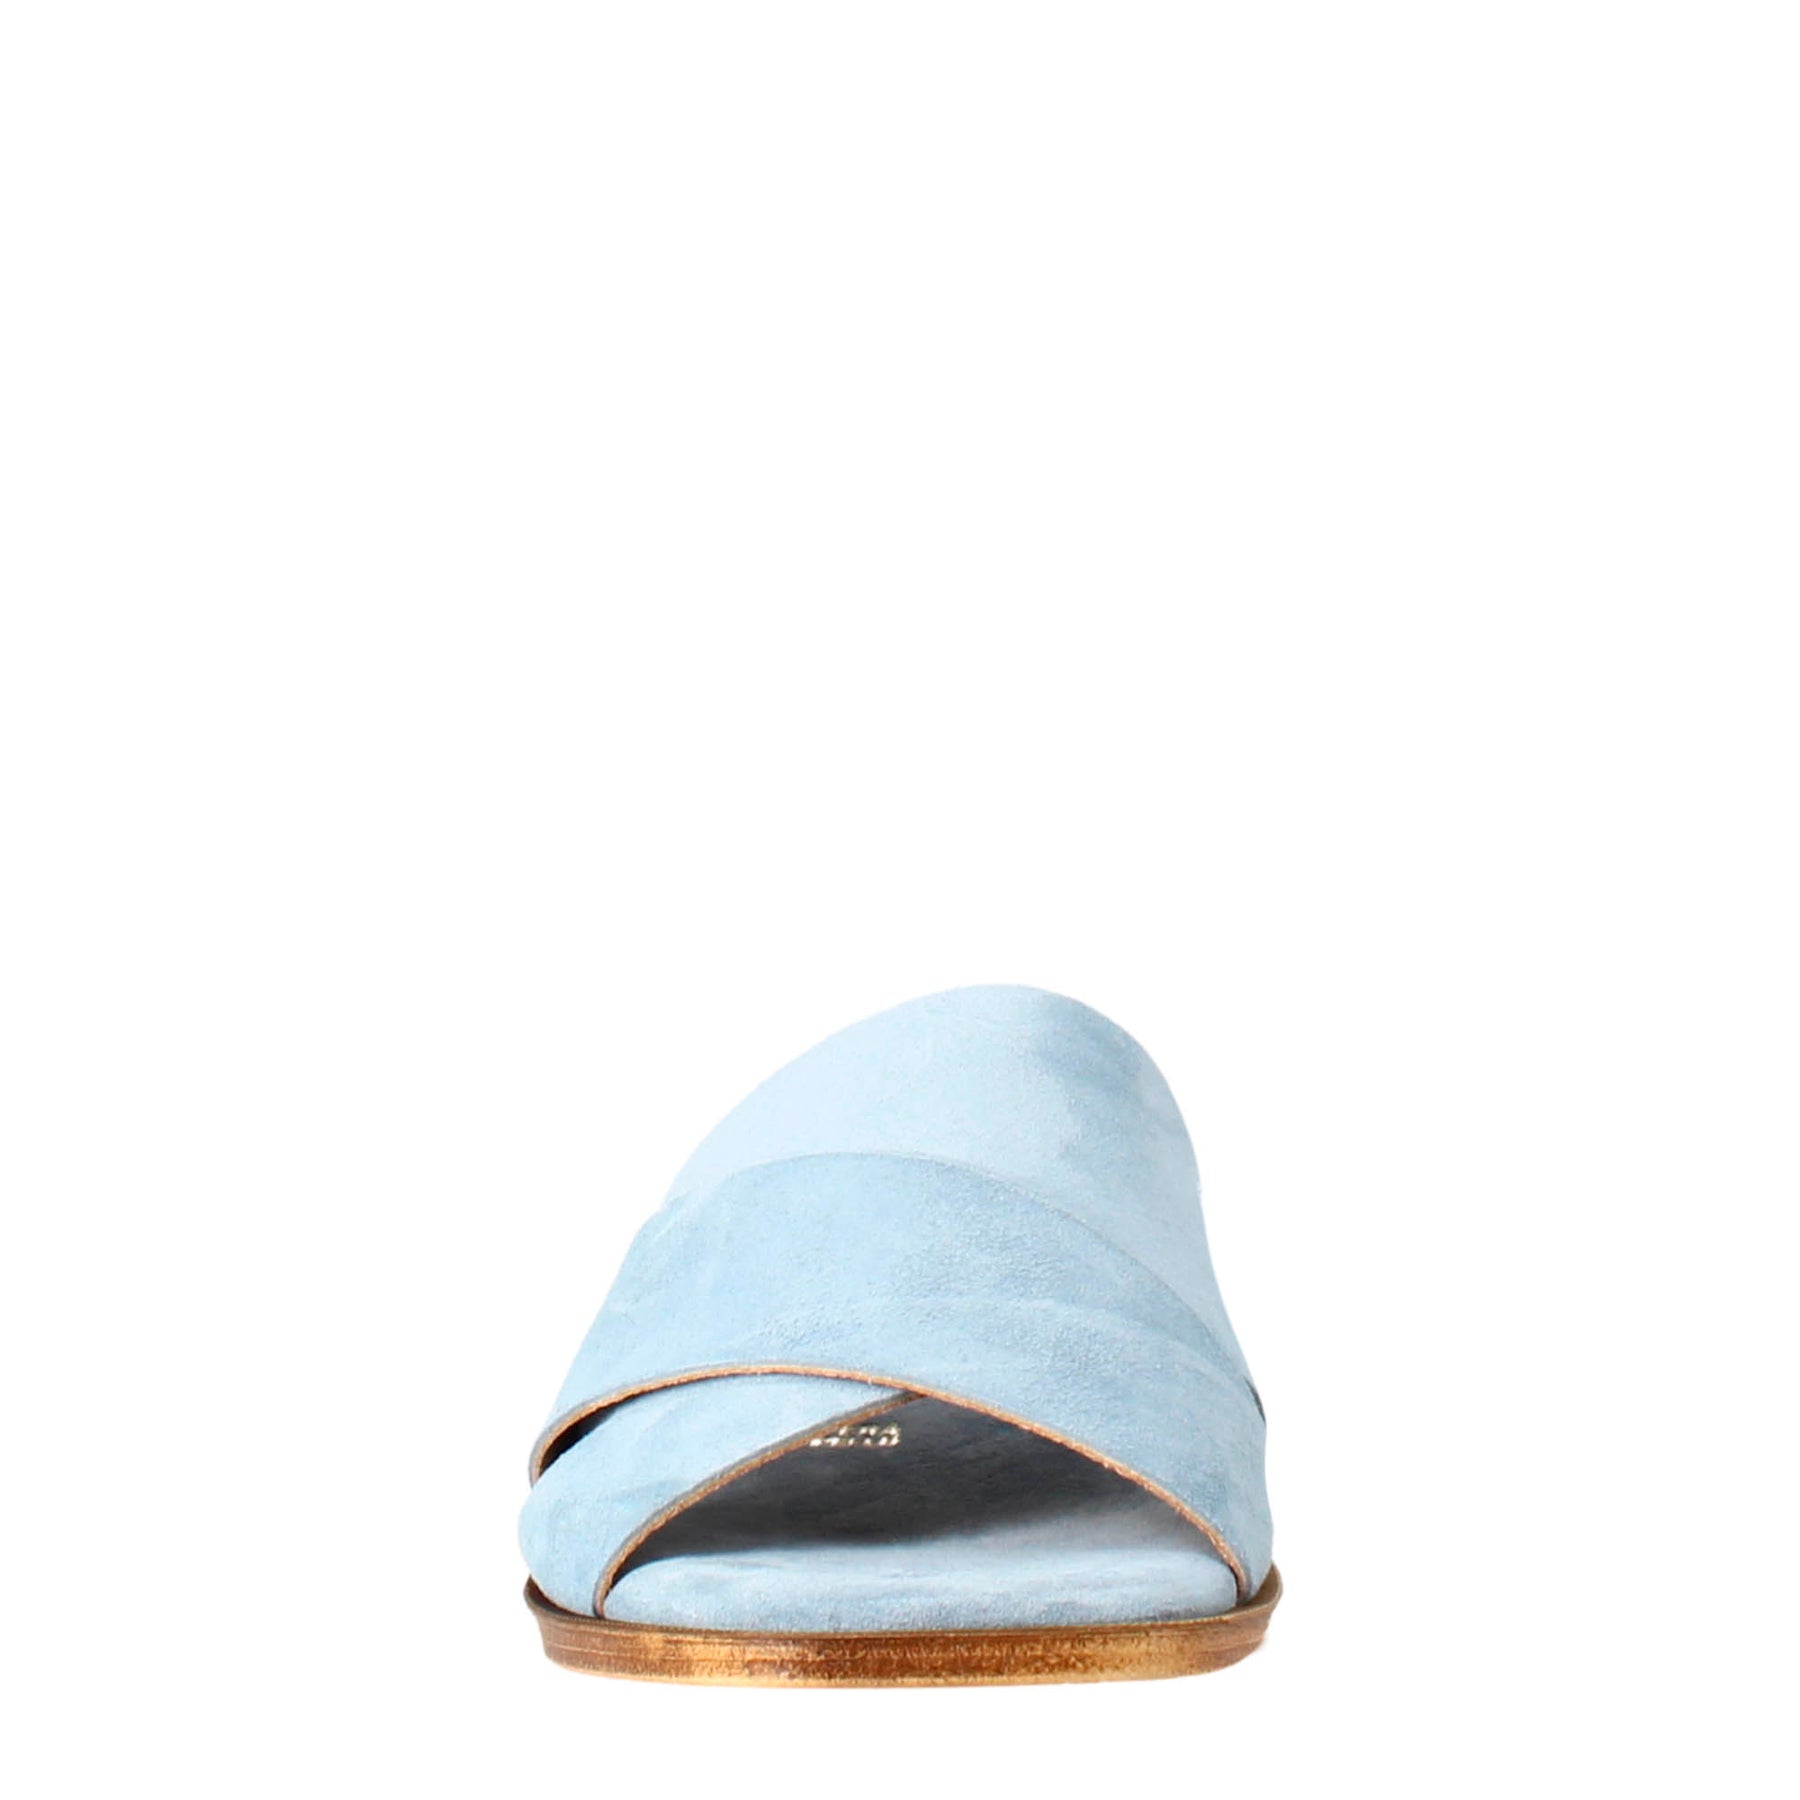 Women's double band sandal in light blue